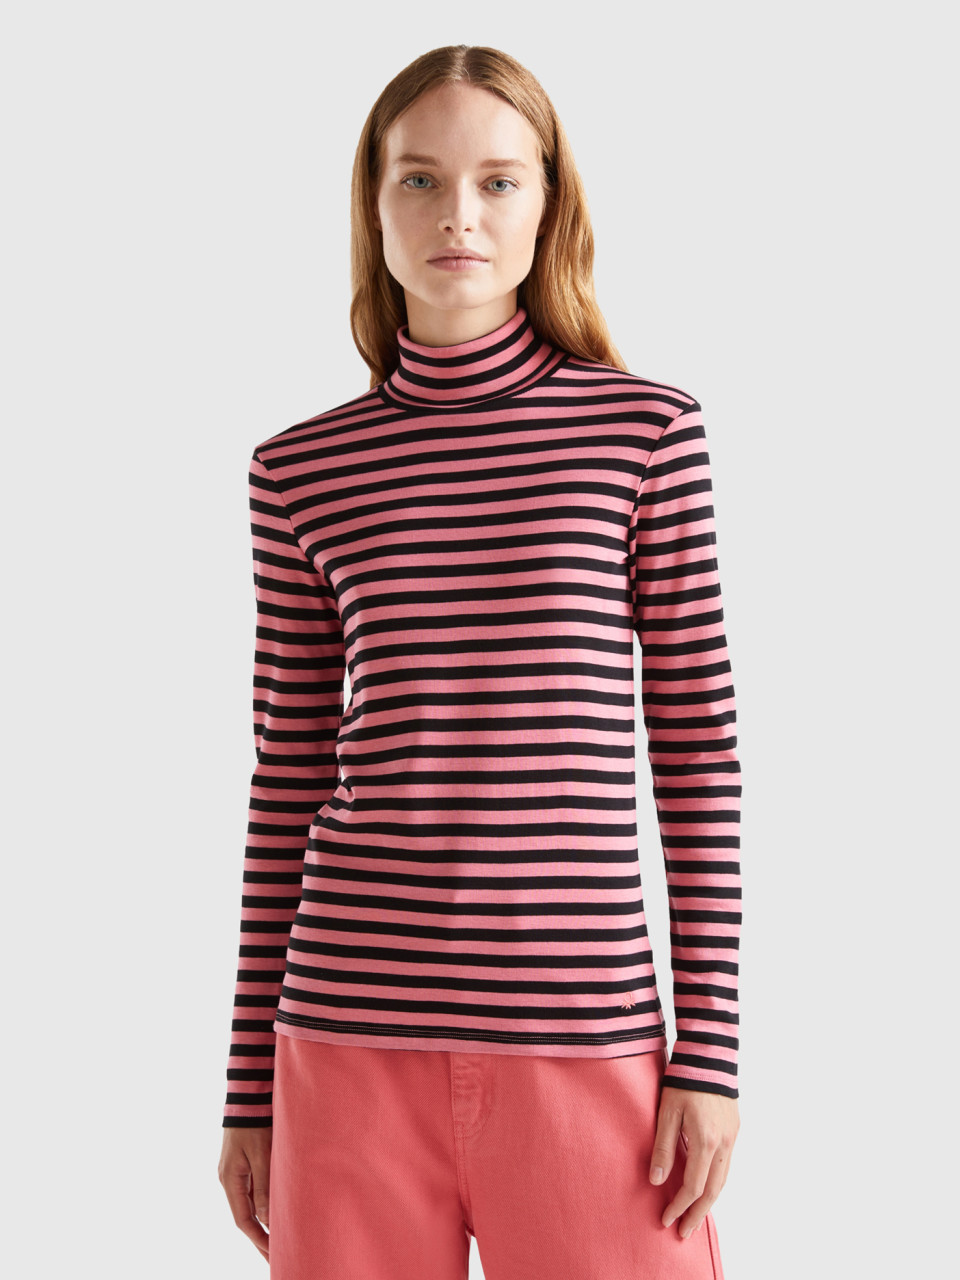 Benetton, Striped Turtleneck T-shirt, Pink, Women